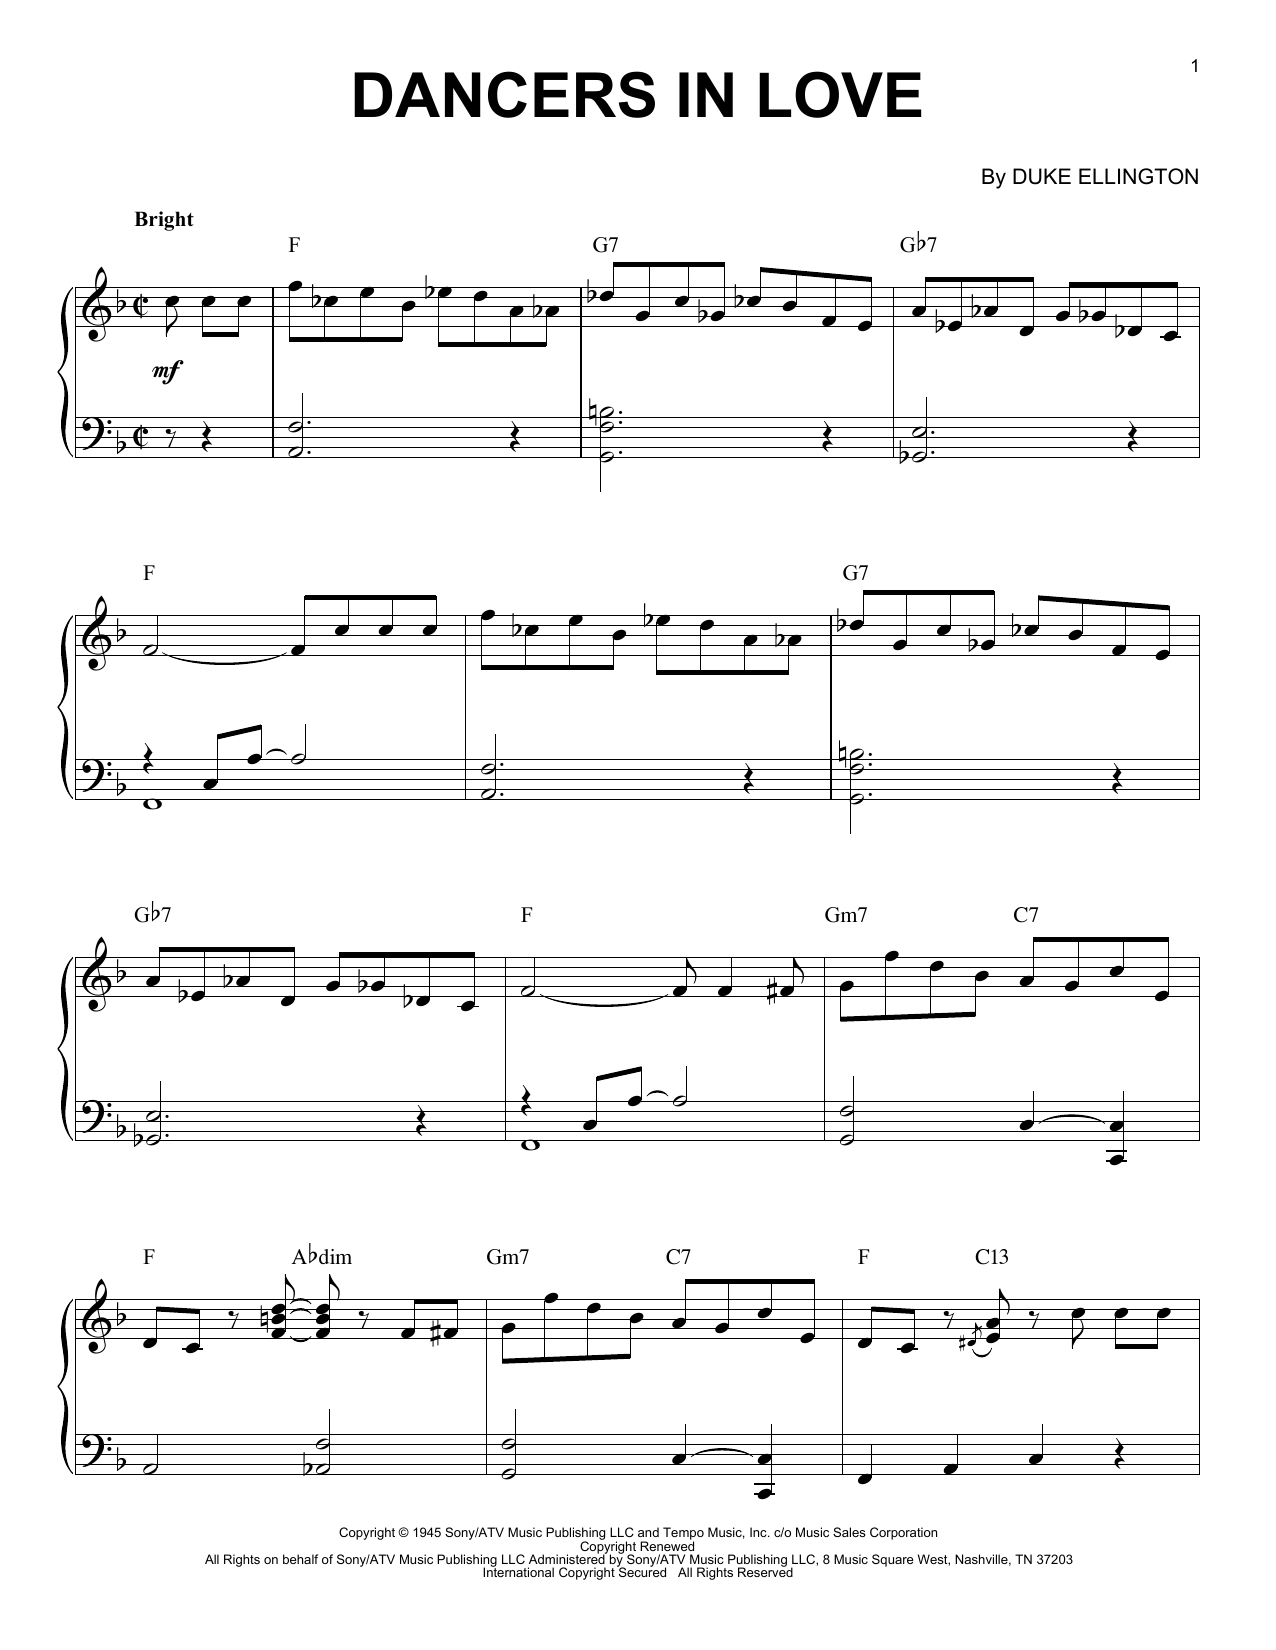 Duke Ellington Dancers In Love (arr. Brent Edstrom) Sheet Music Notes & Chords for Piano - Download or Print PDF